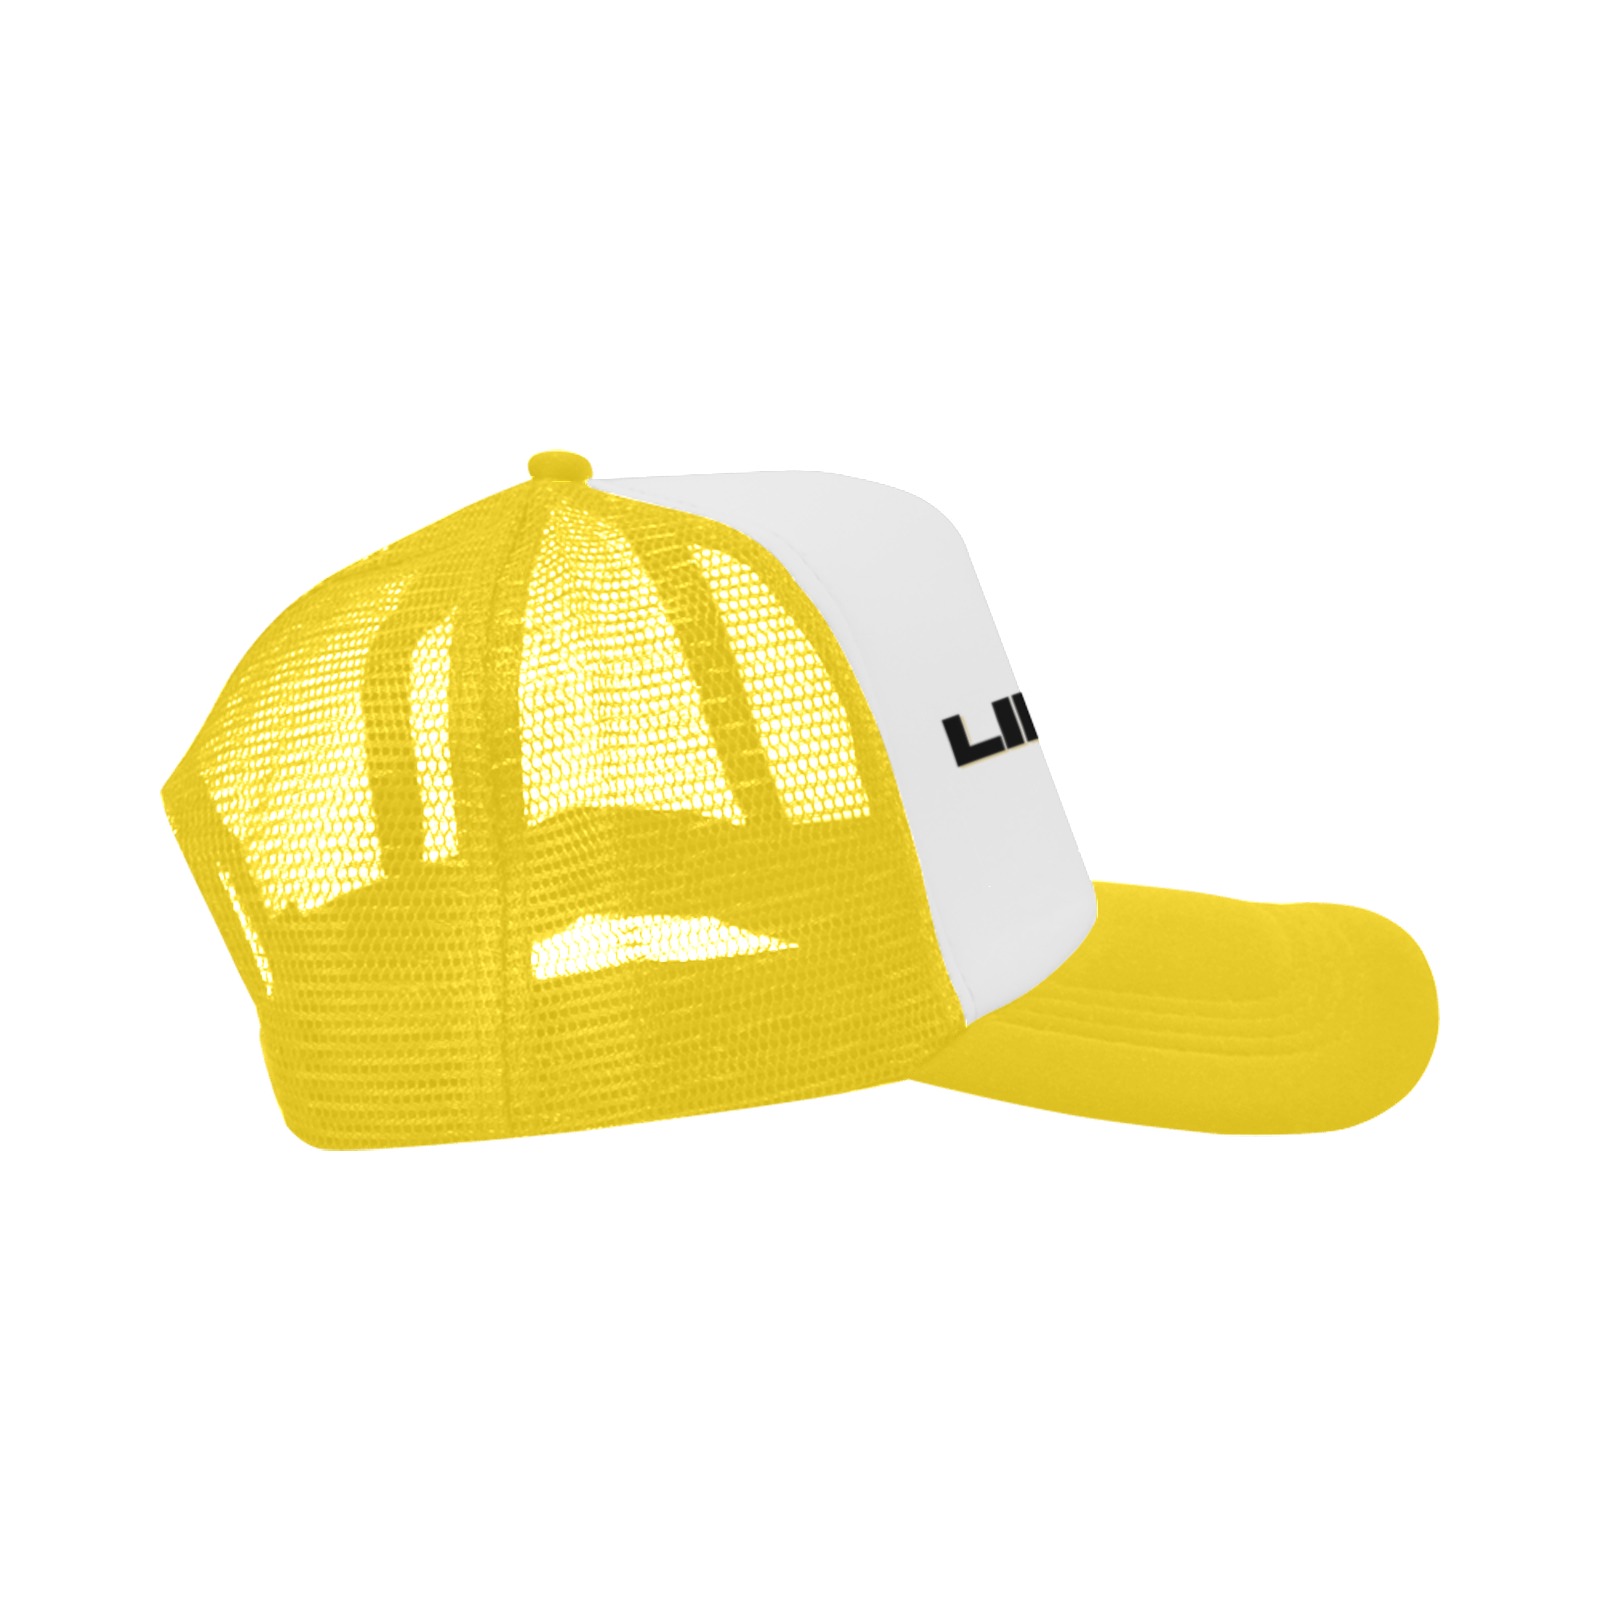 Lil Gods Yellow Trucker Hat